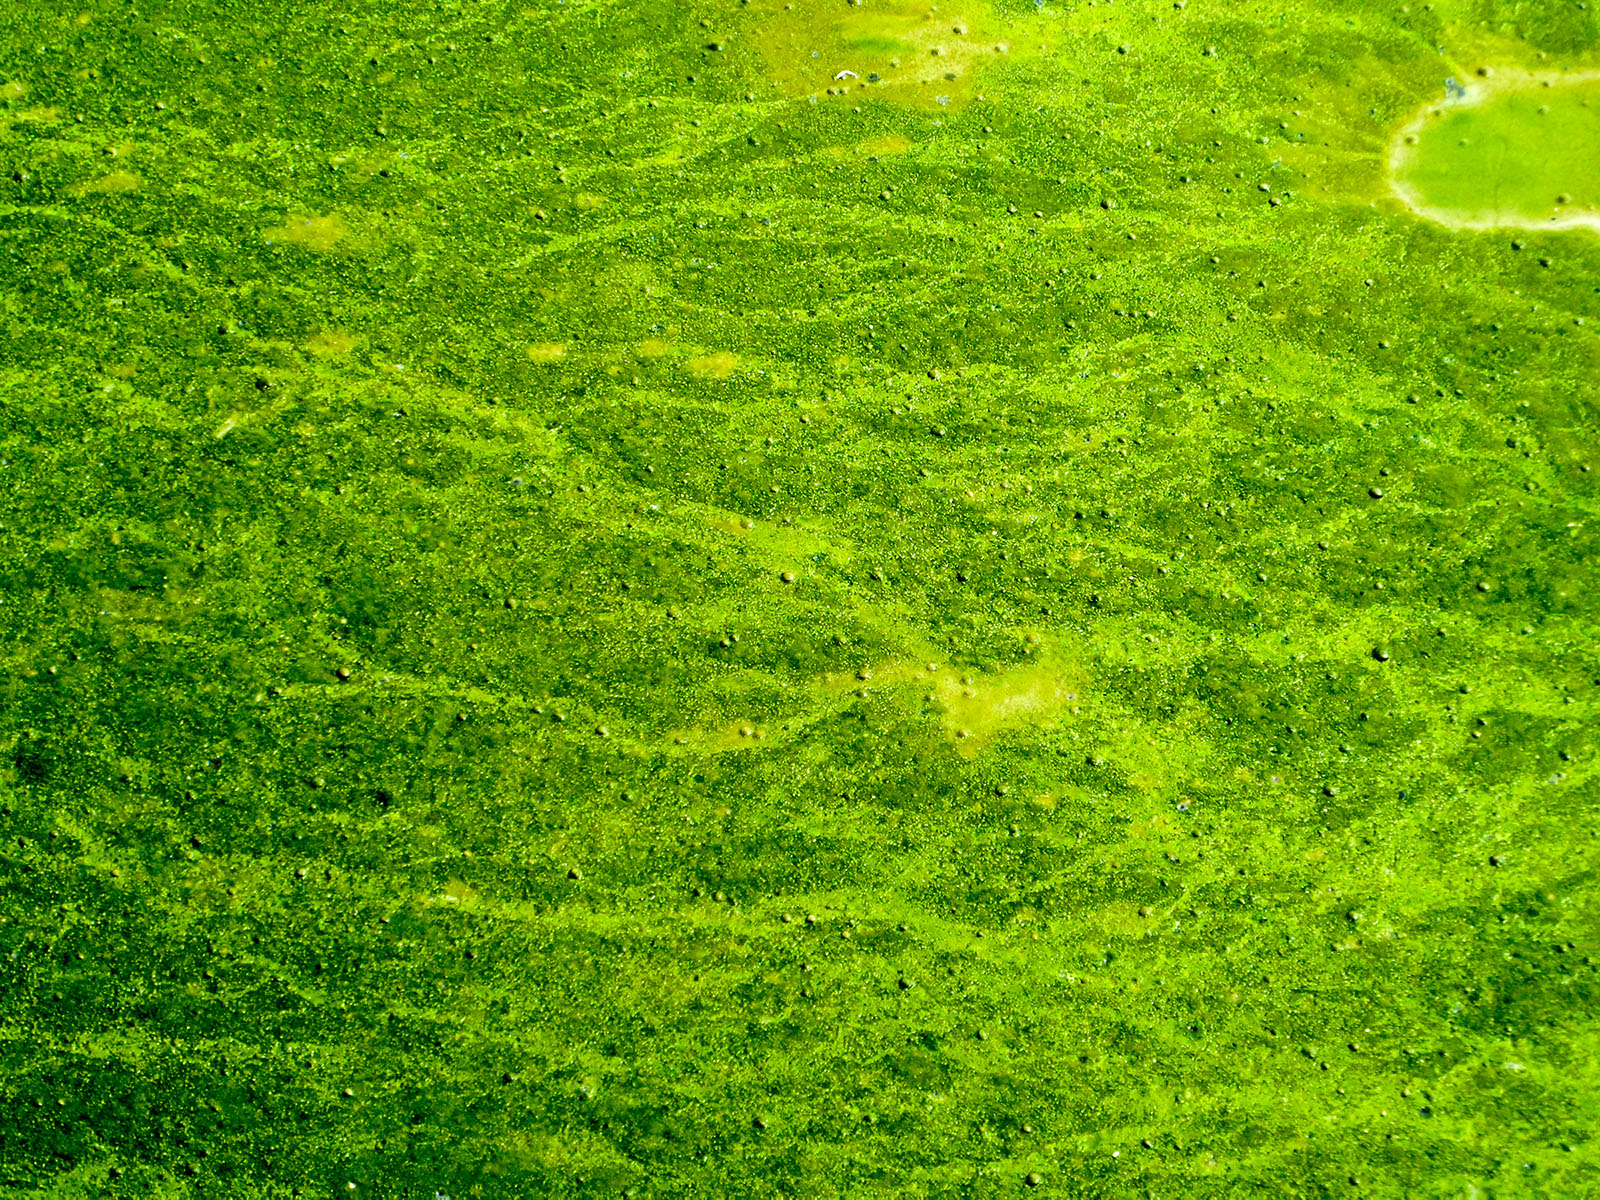 Revolutionizing Energy: Scientists Develop Carbon-Negative Algae Power Cells